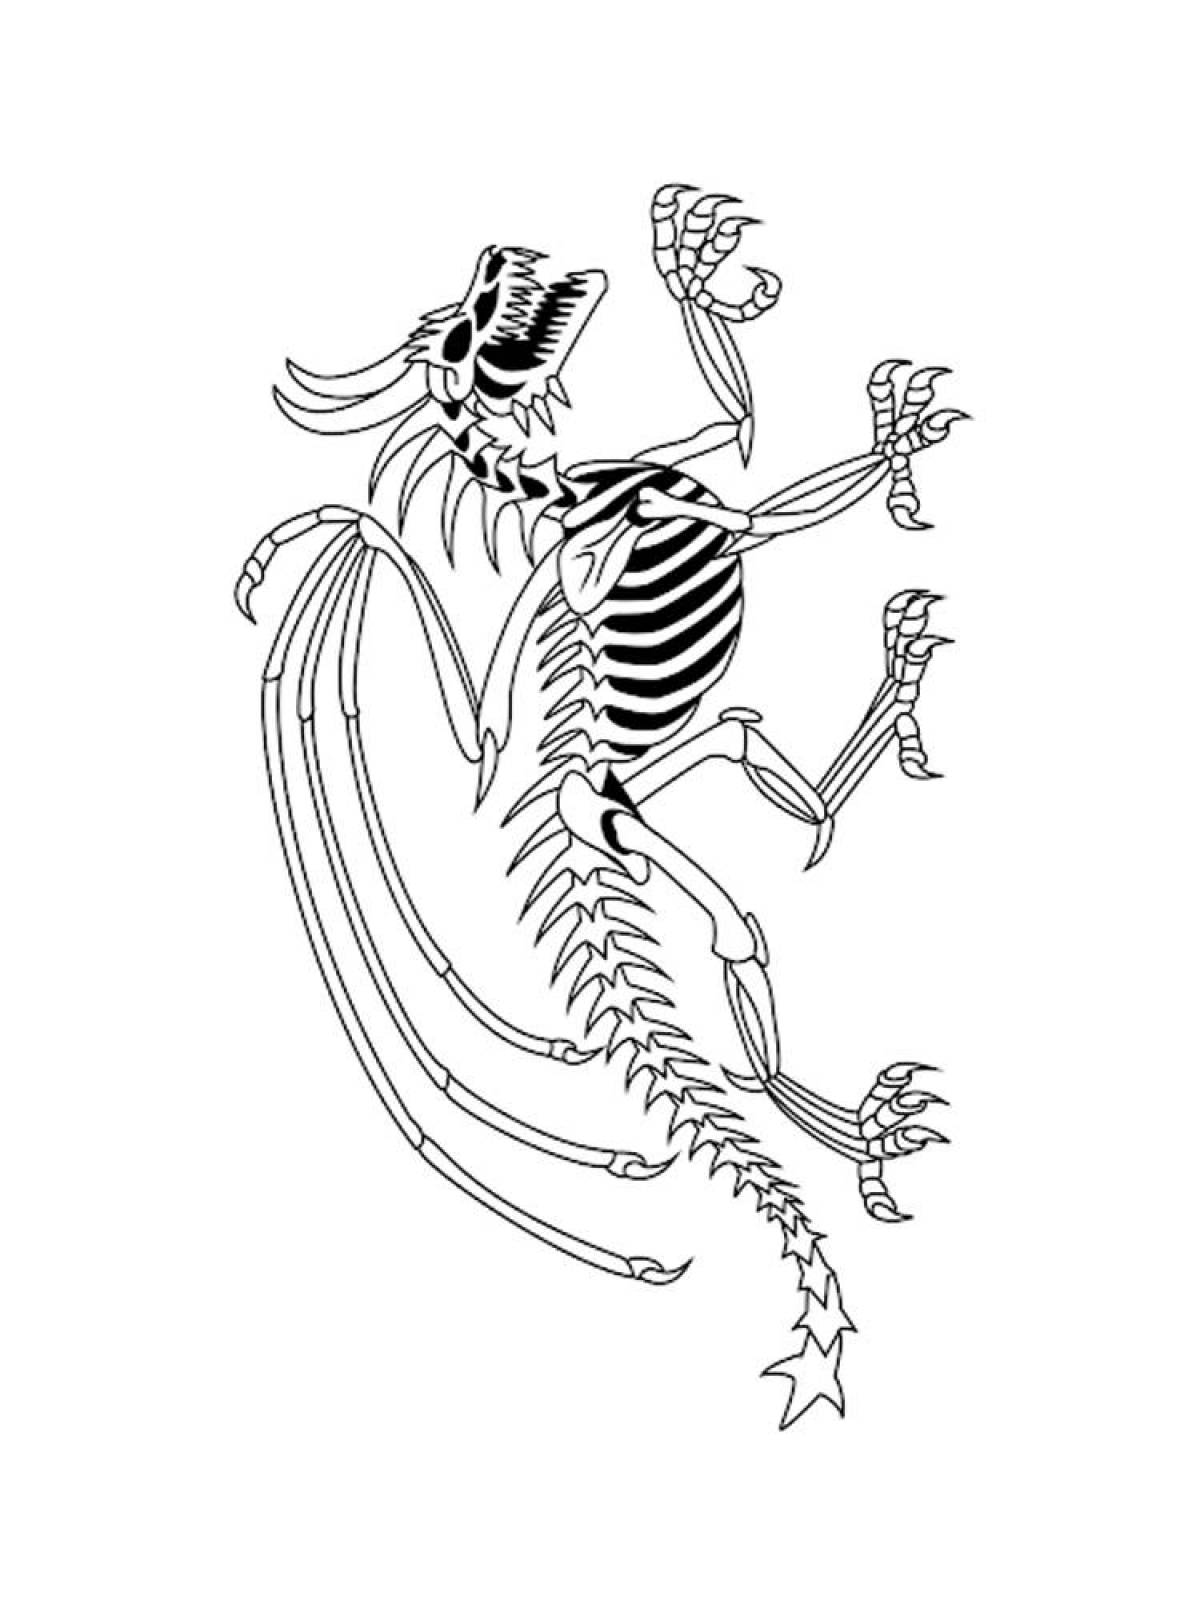 Замысловатая страница раскраски скелета